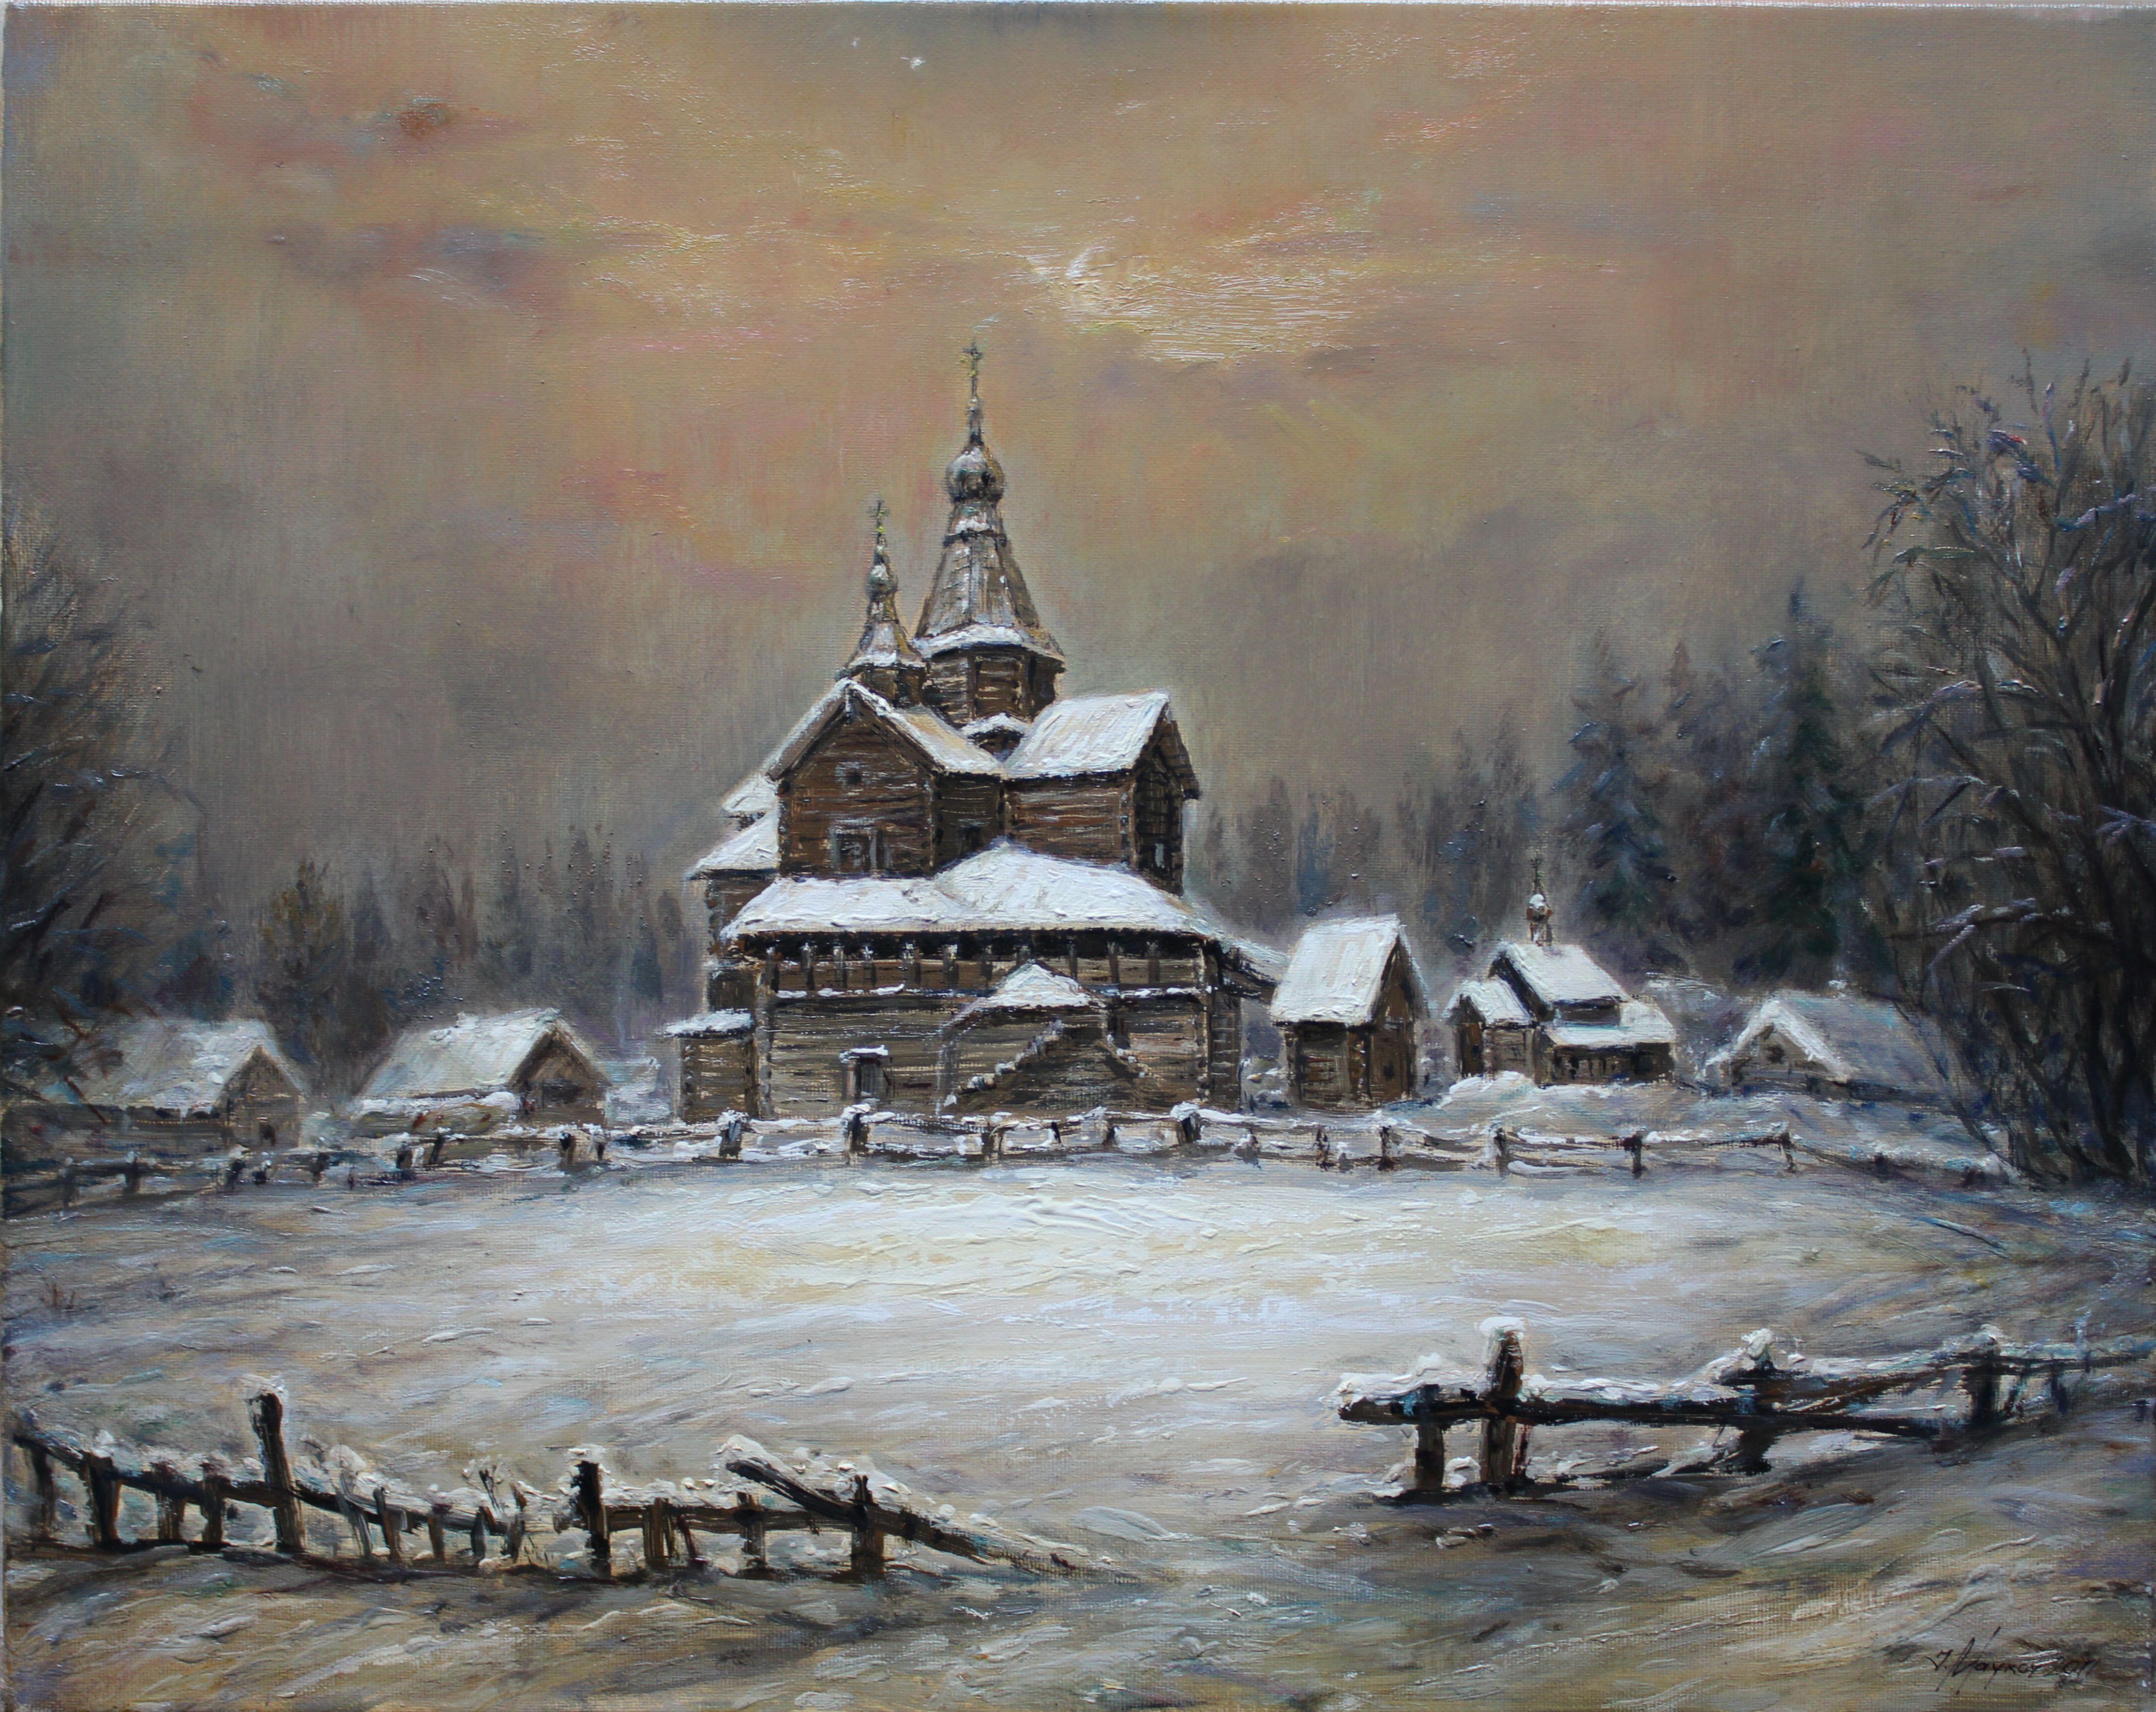 Igor Maikov Landscape Painting - Winter evening. Church  2011. Oil on canvas. 40x50 cm